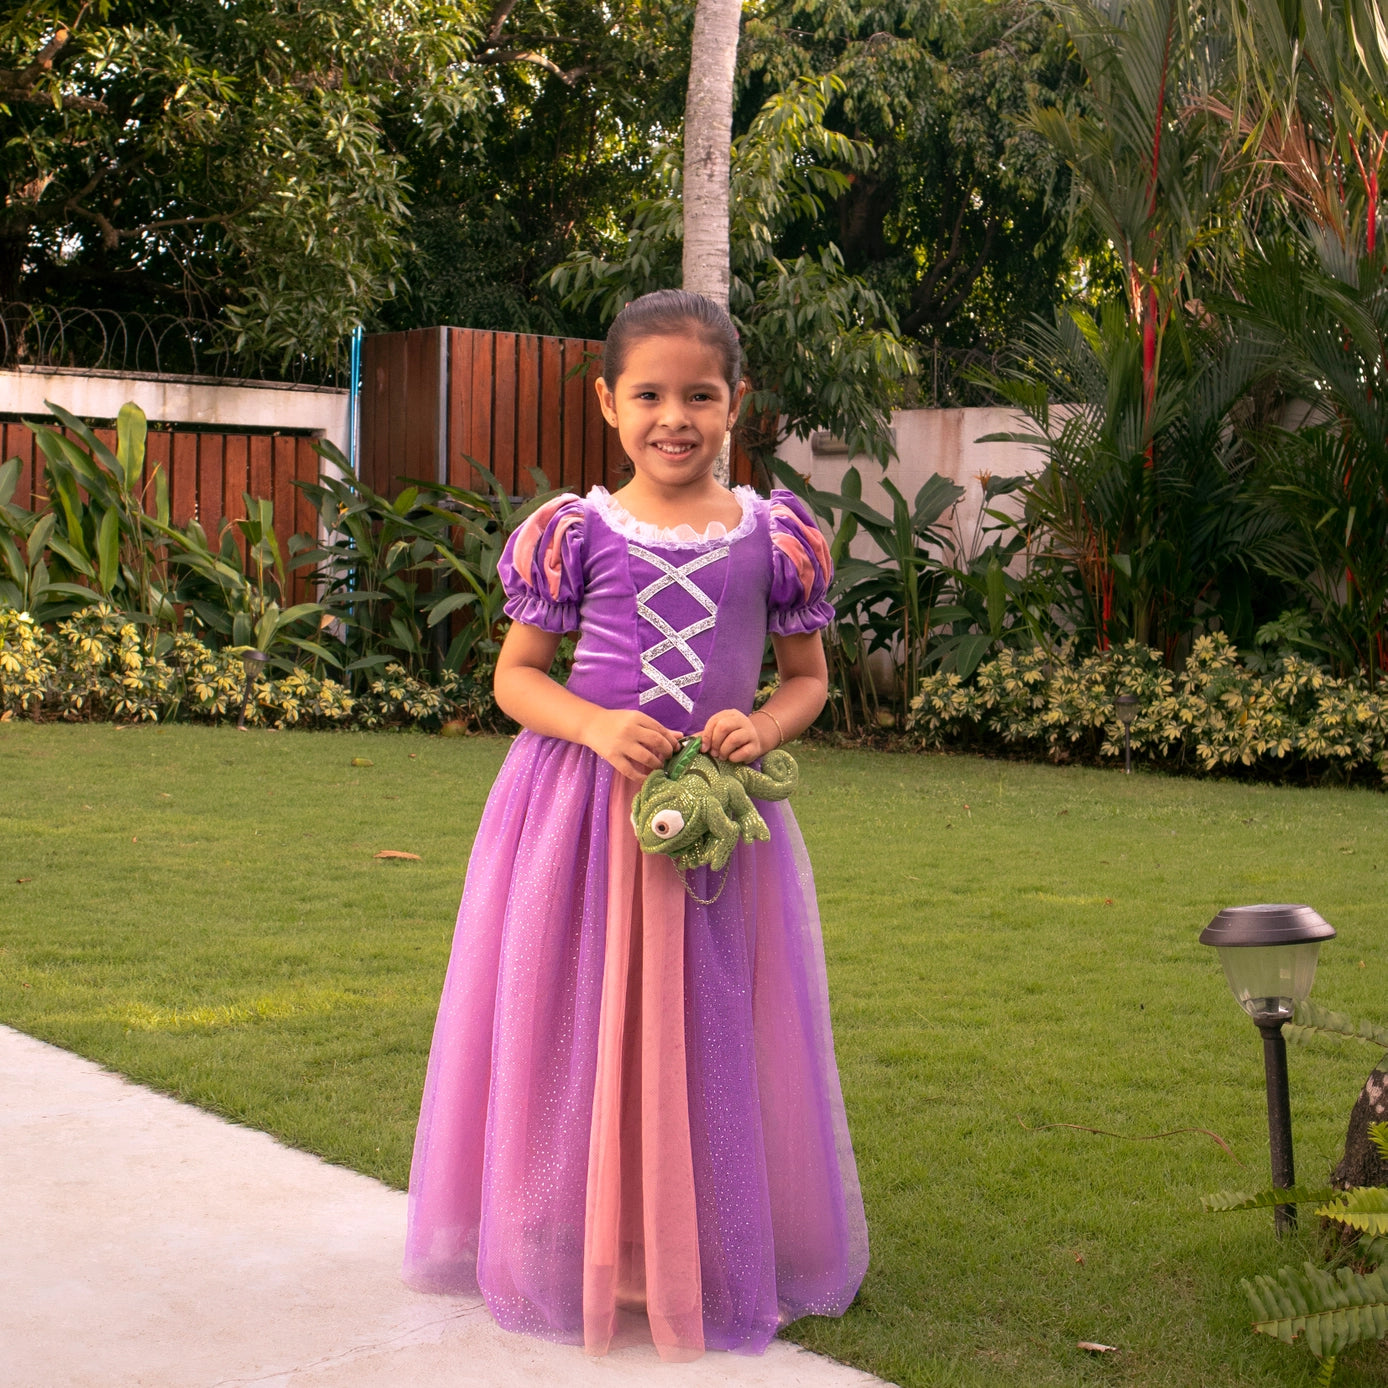 Rapunzel Princess Costume Dress